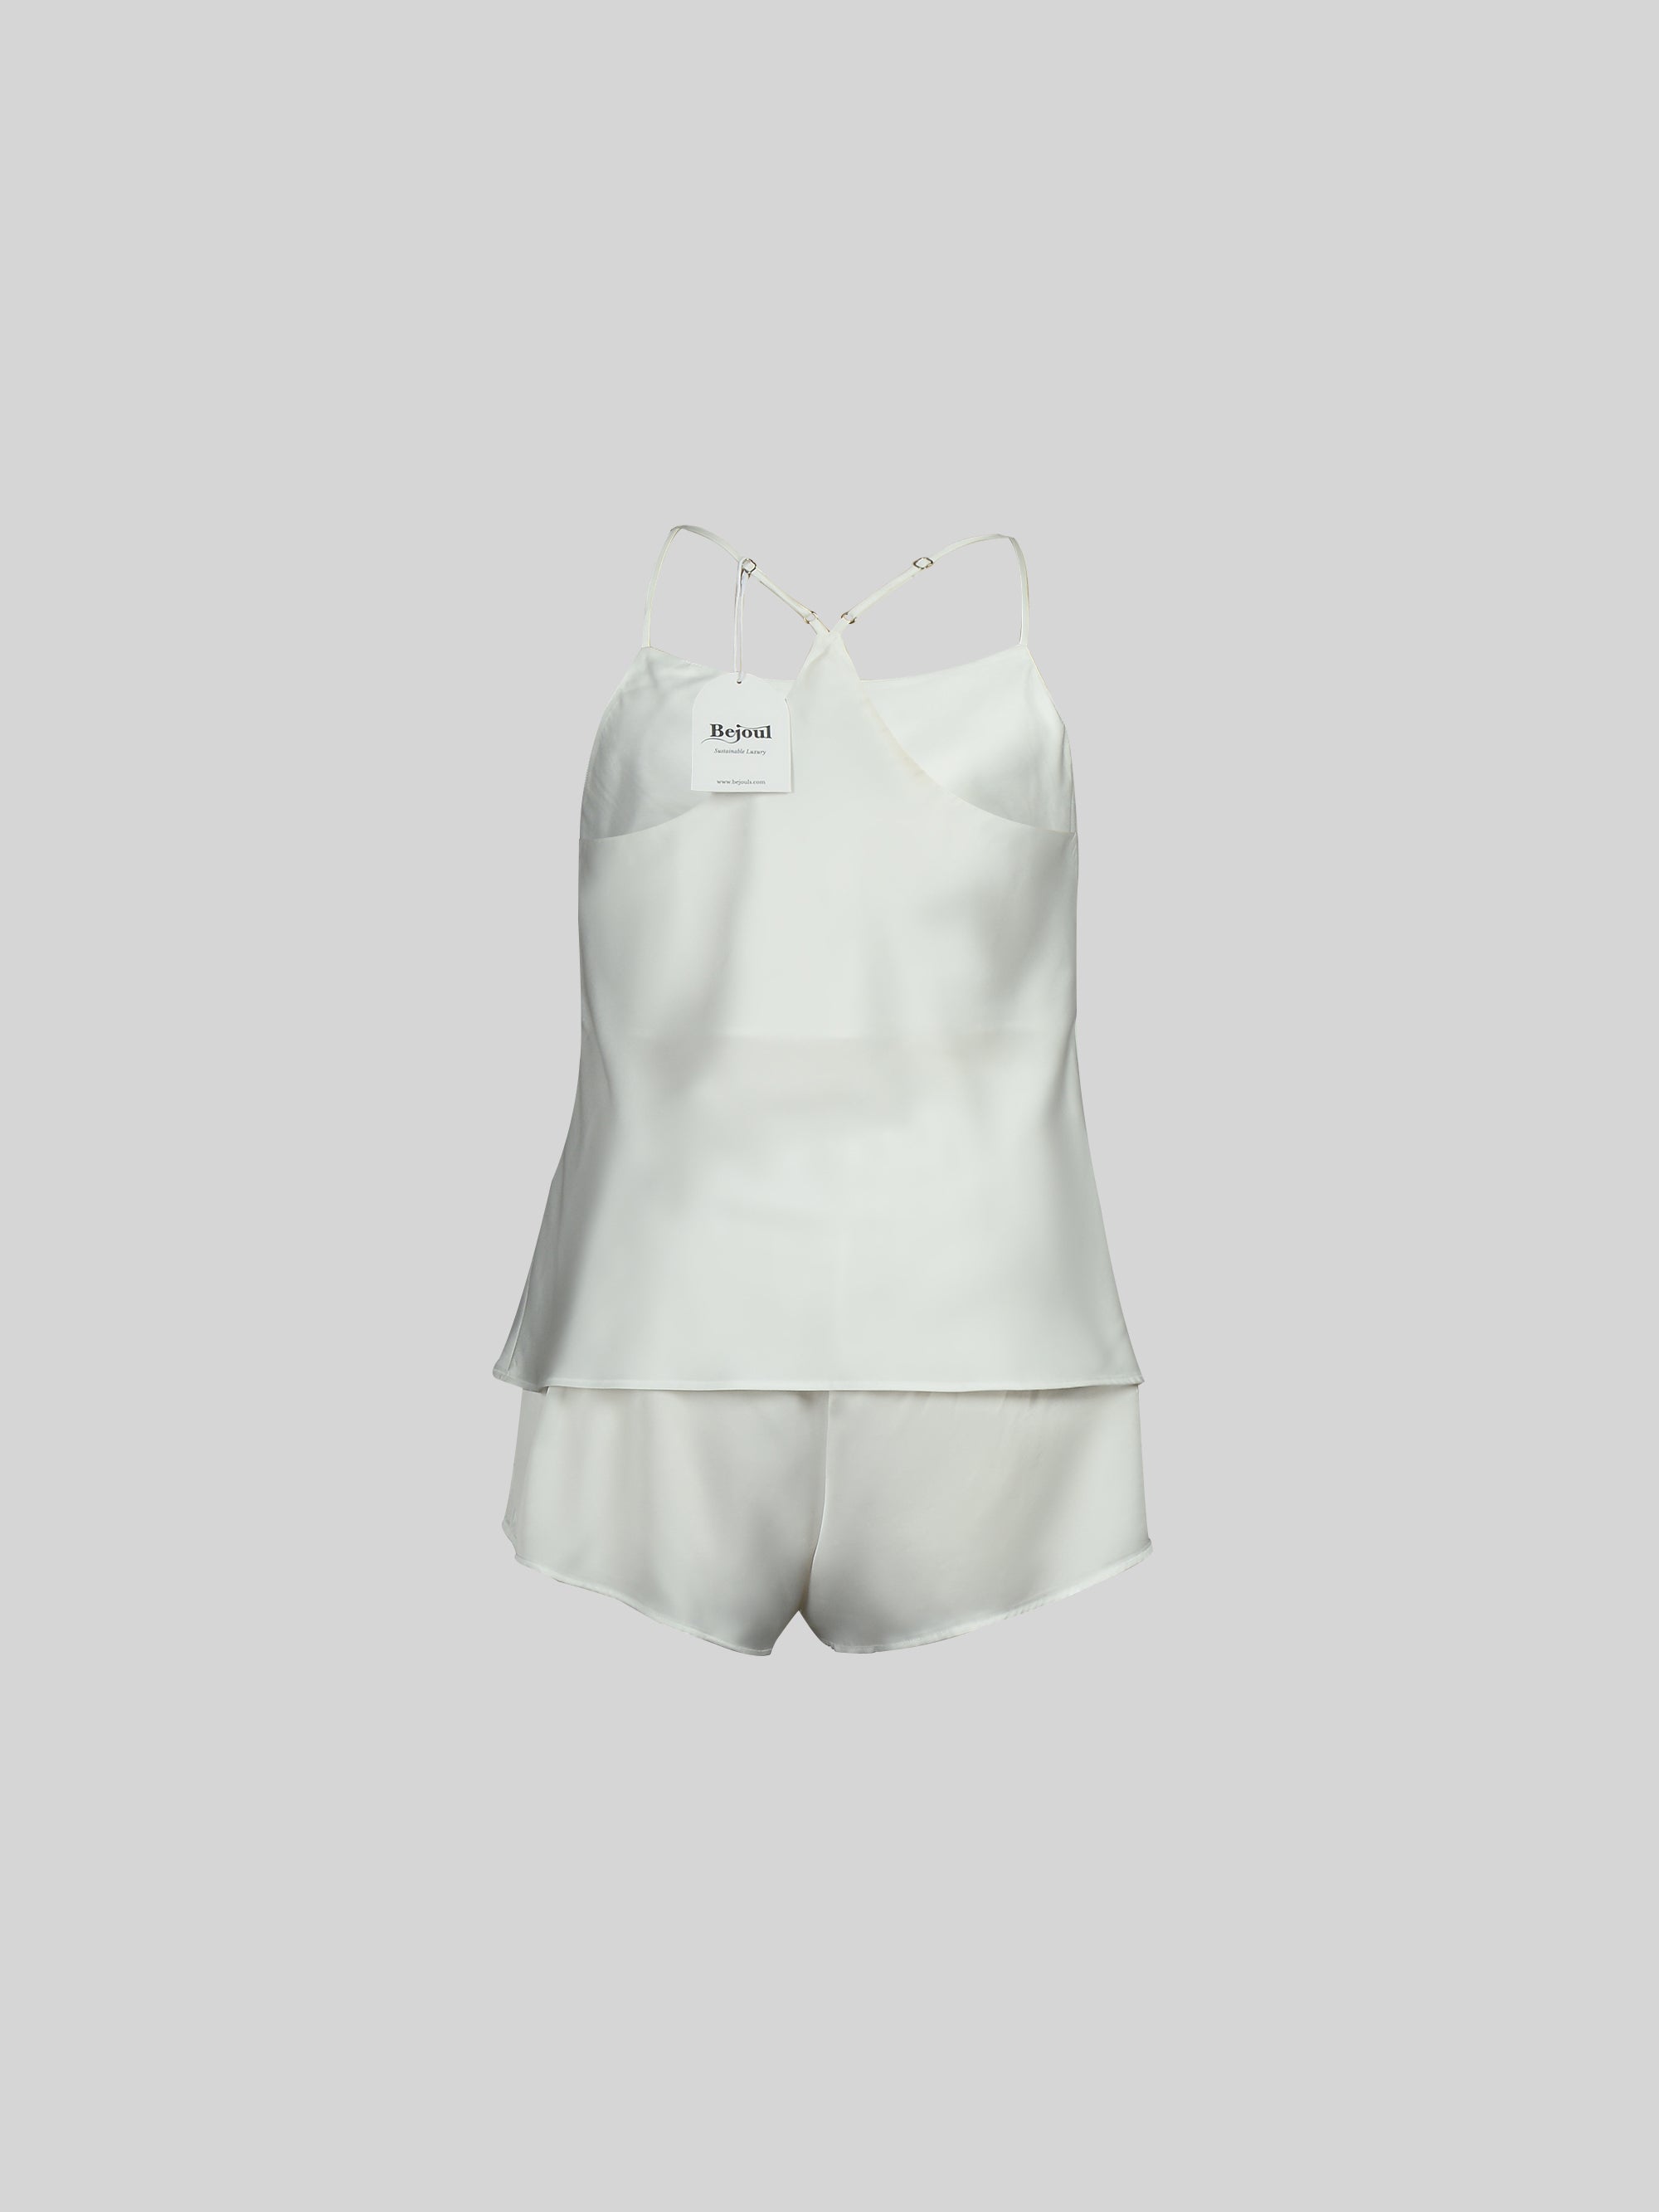 White Camisole Set – Bejoul